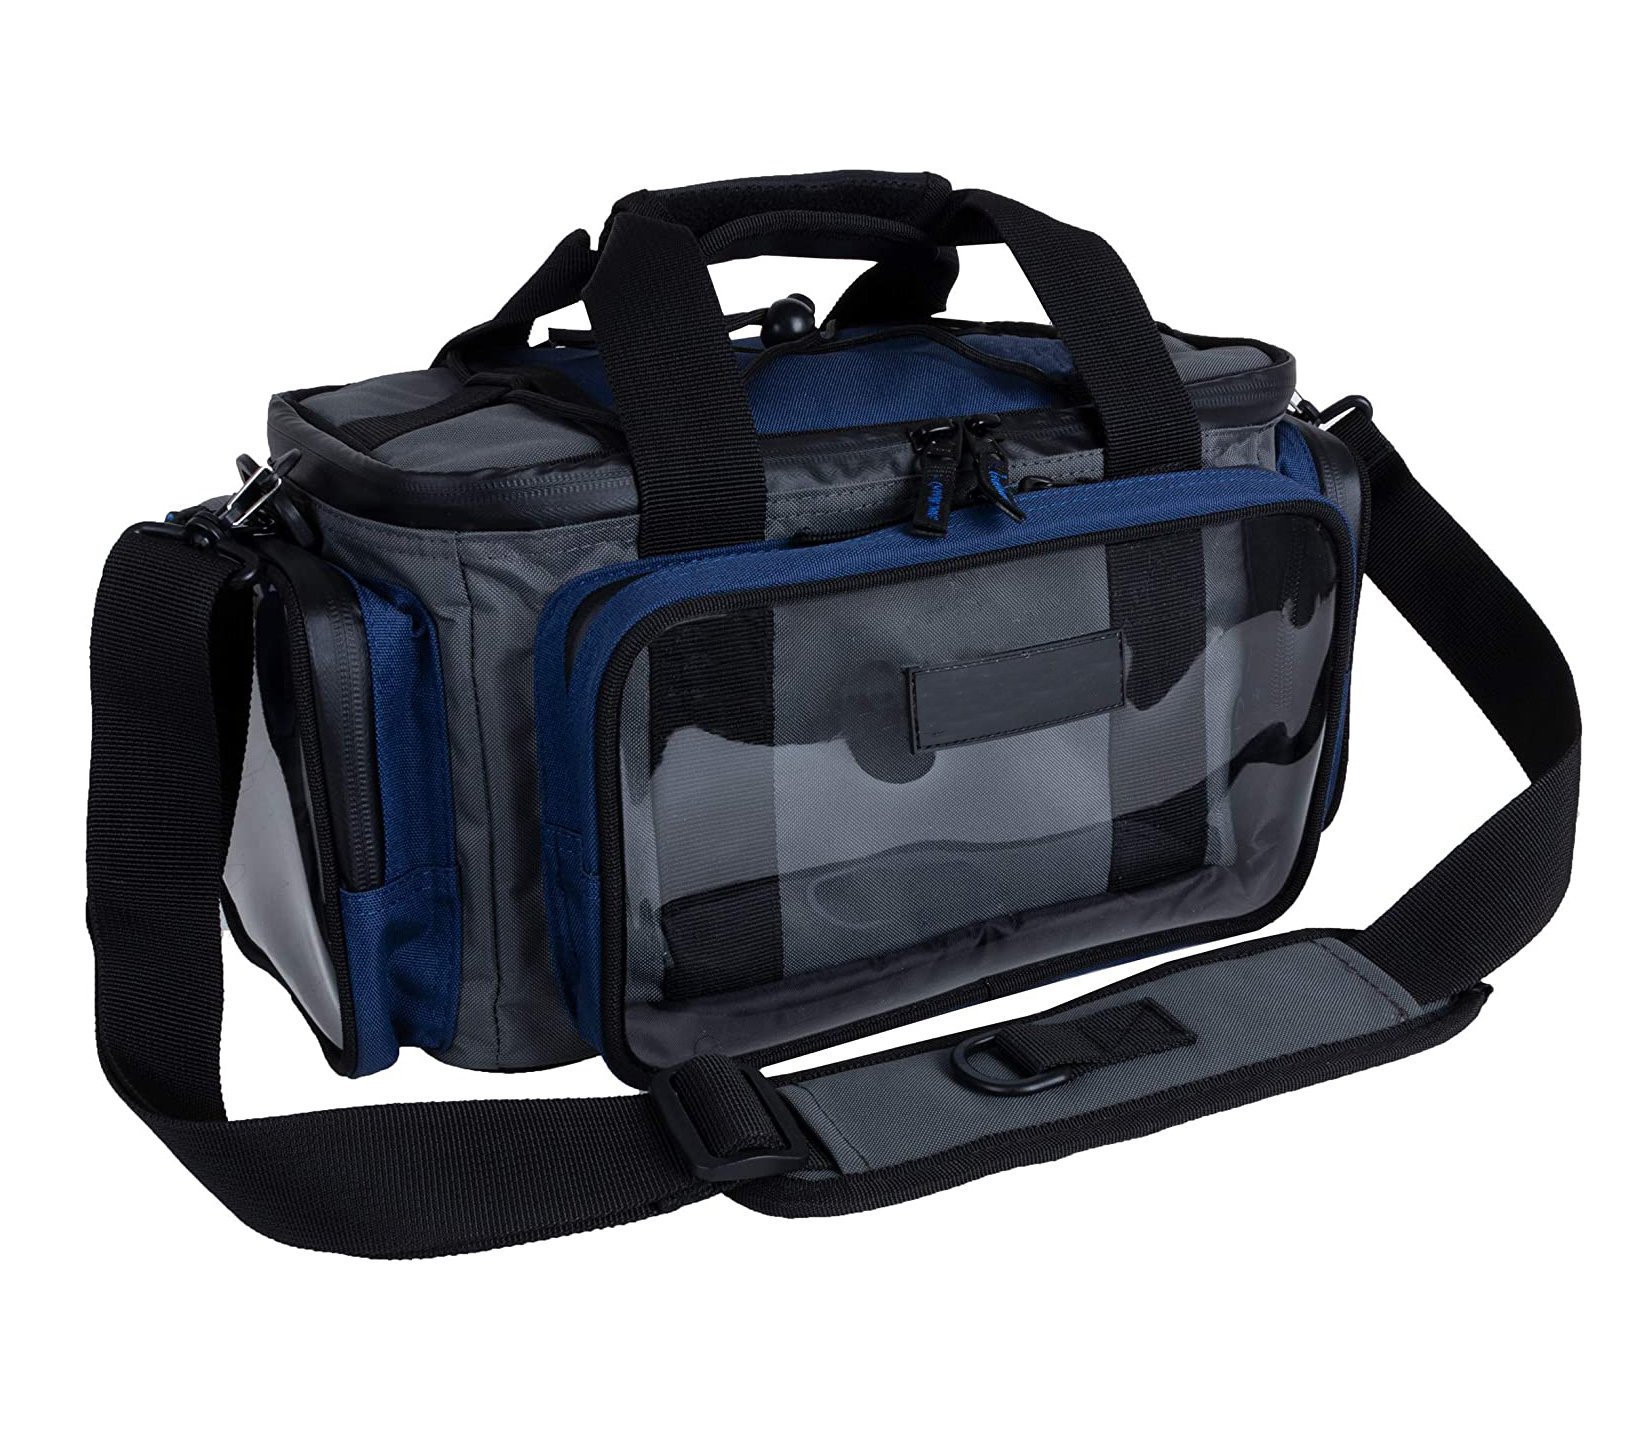 Tackle Bag for Fishing Soft Sided Tackle Box Accessory Pack Shoulder Strap and Bottle Holder 